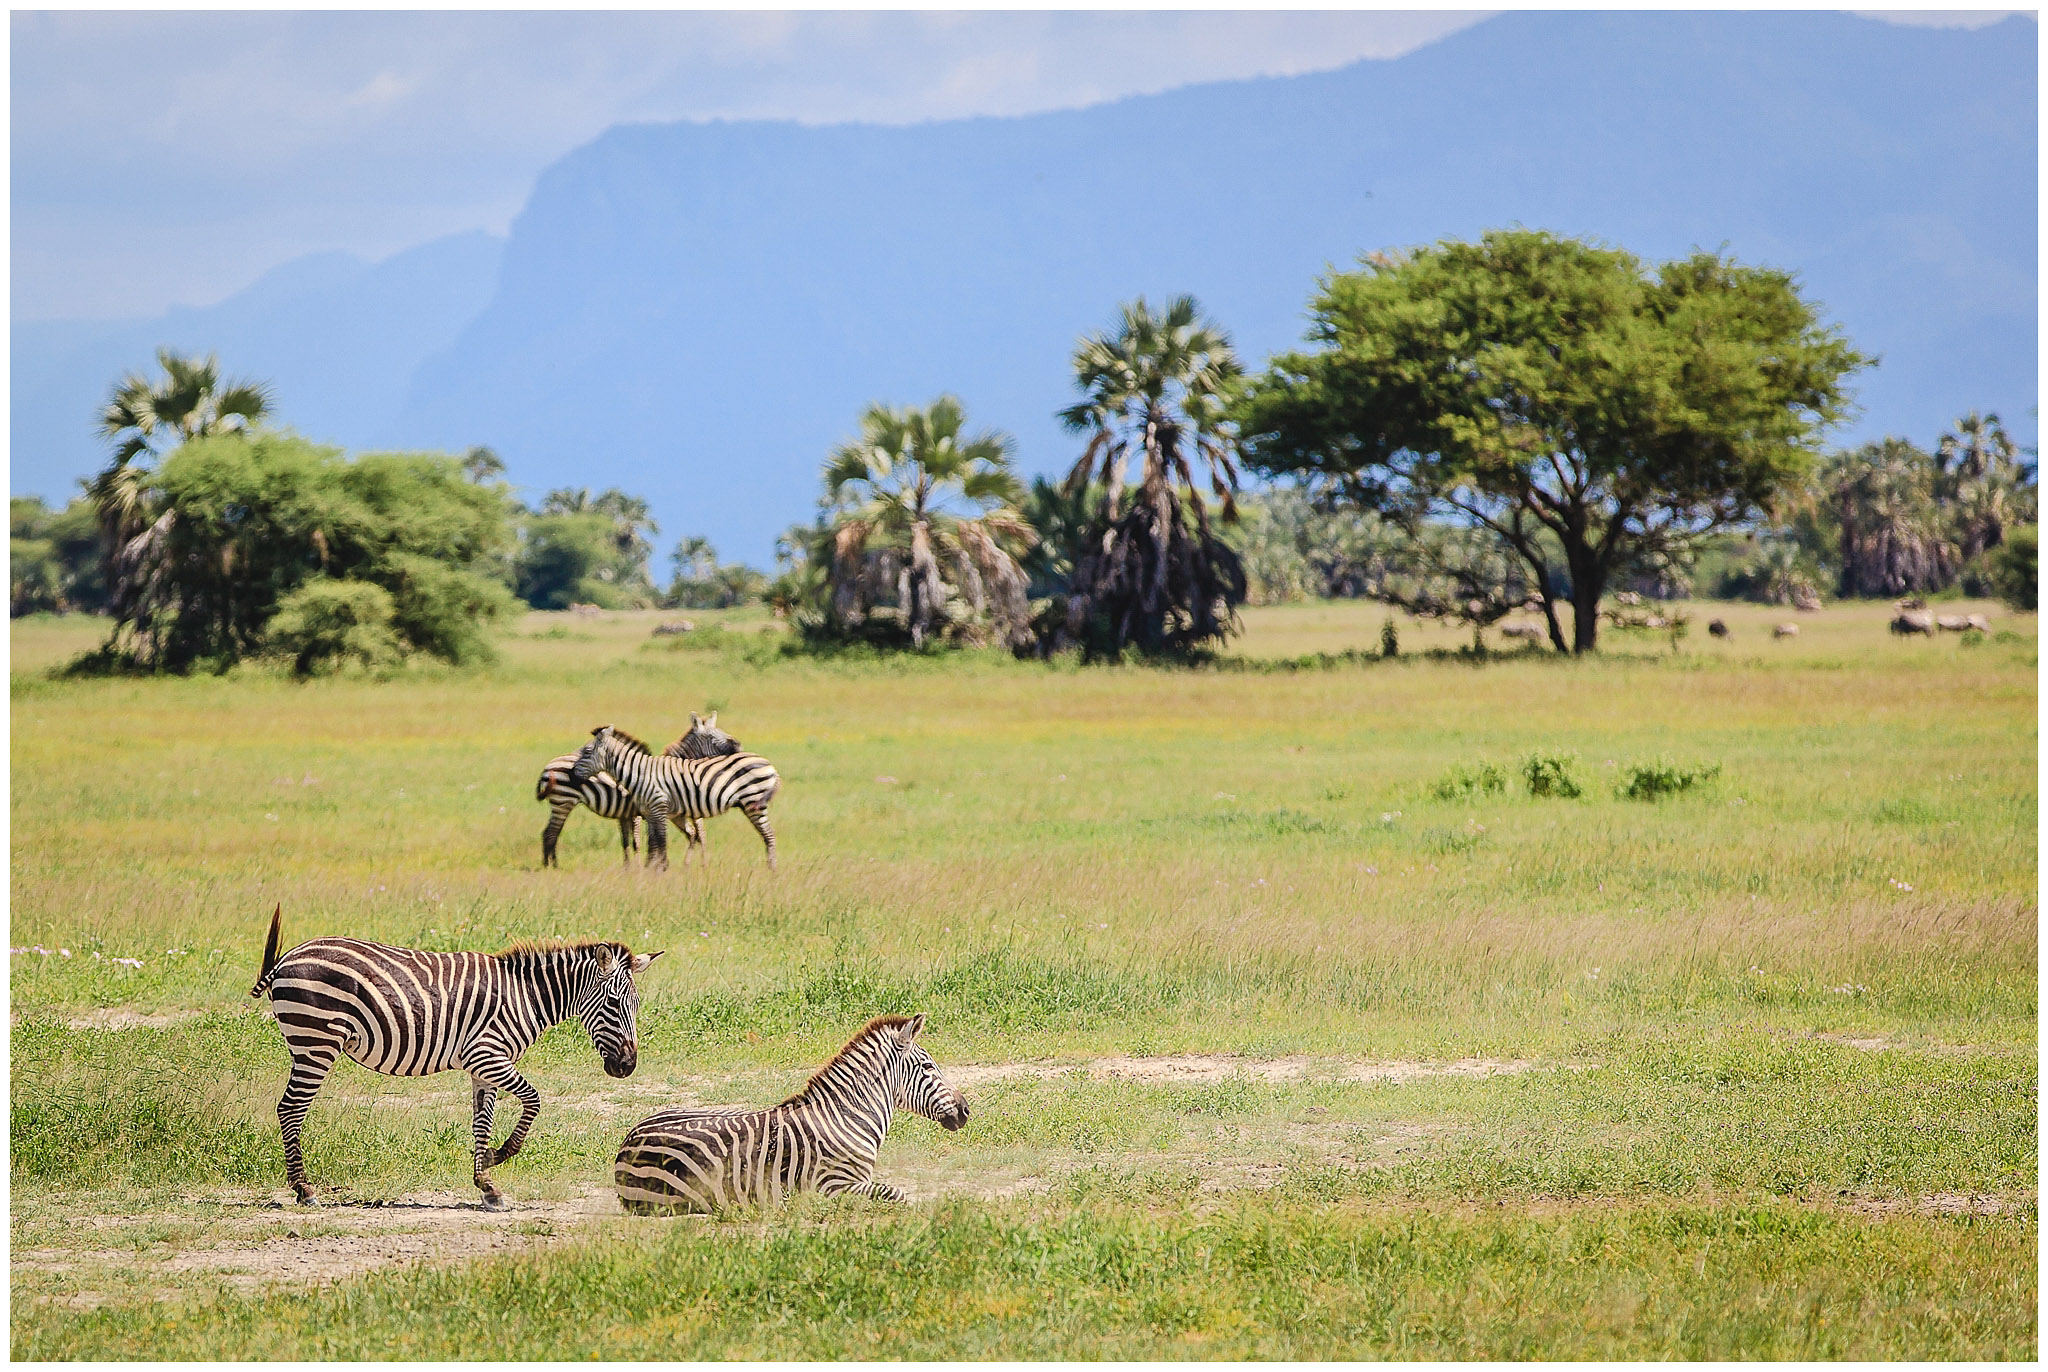 Zebras resting in Tarangire National Park, Tanzania, Africa